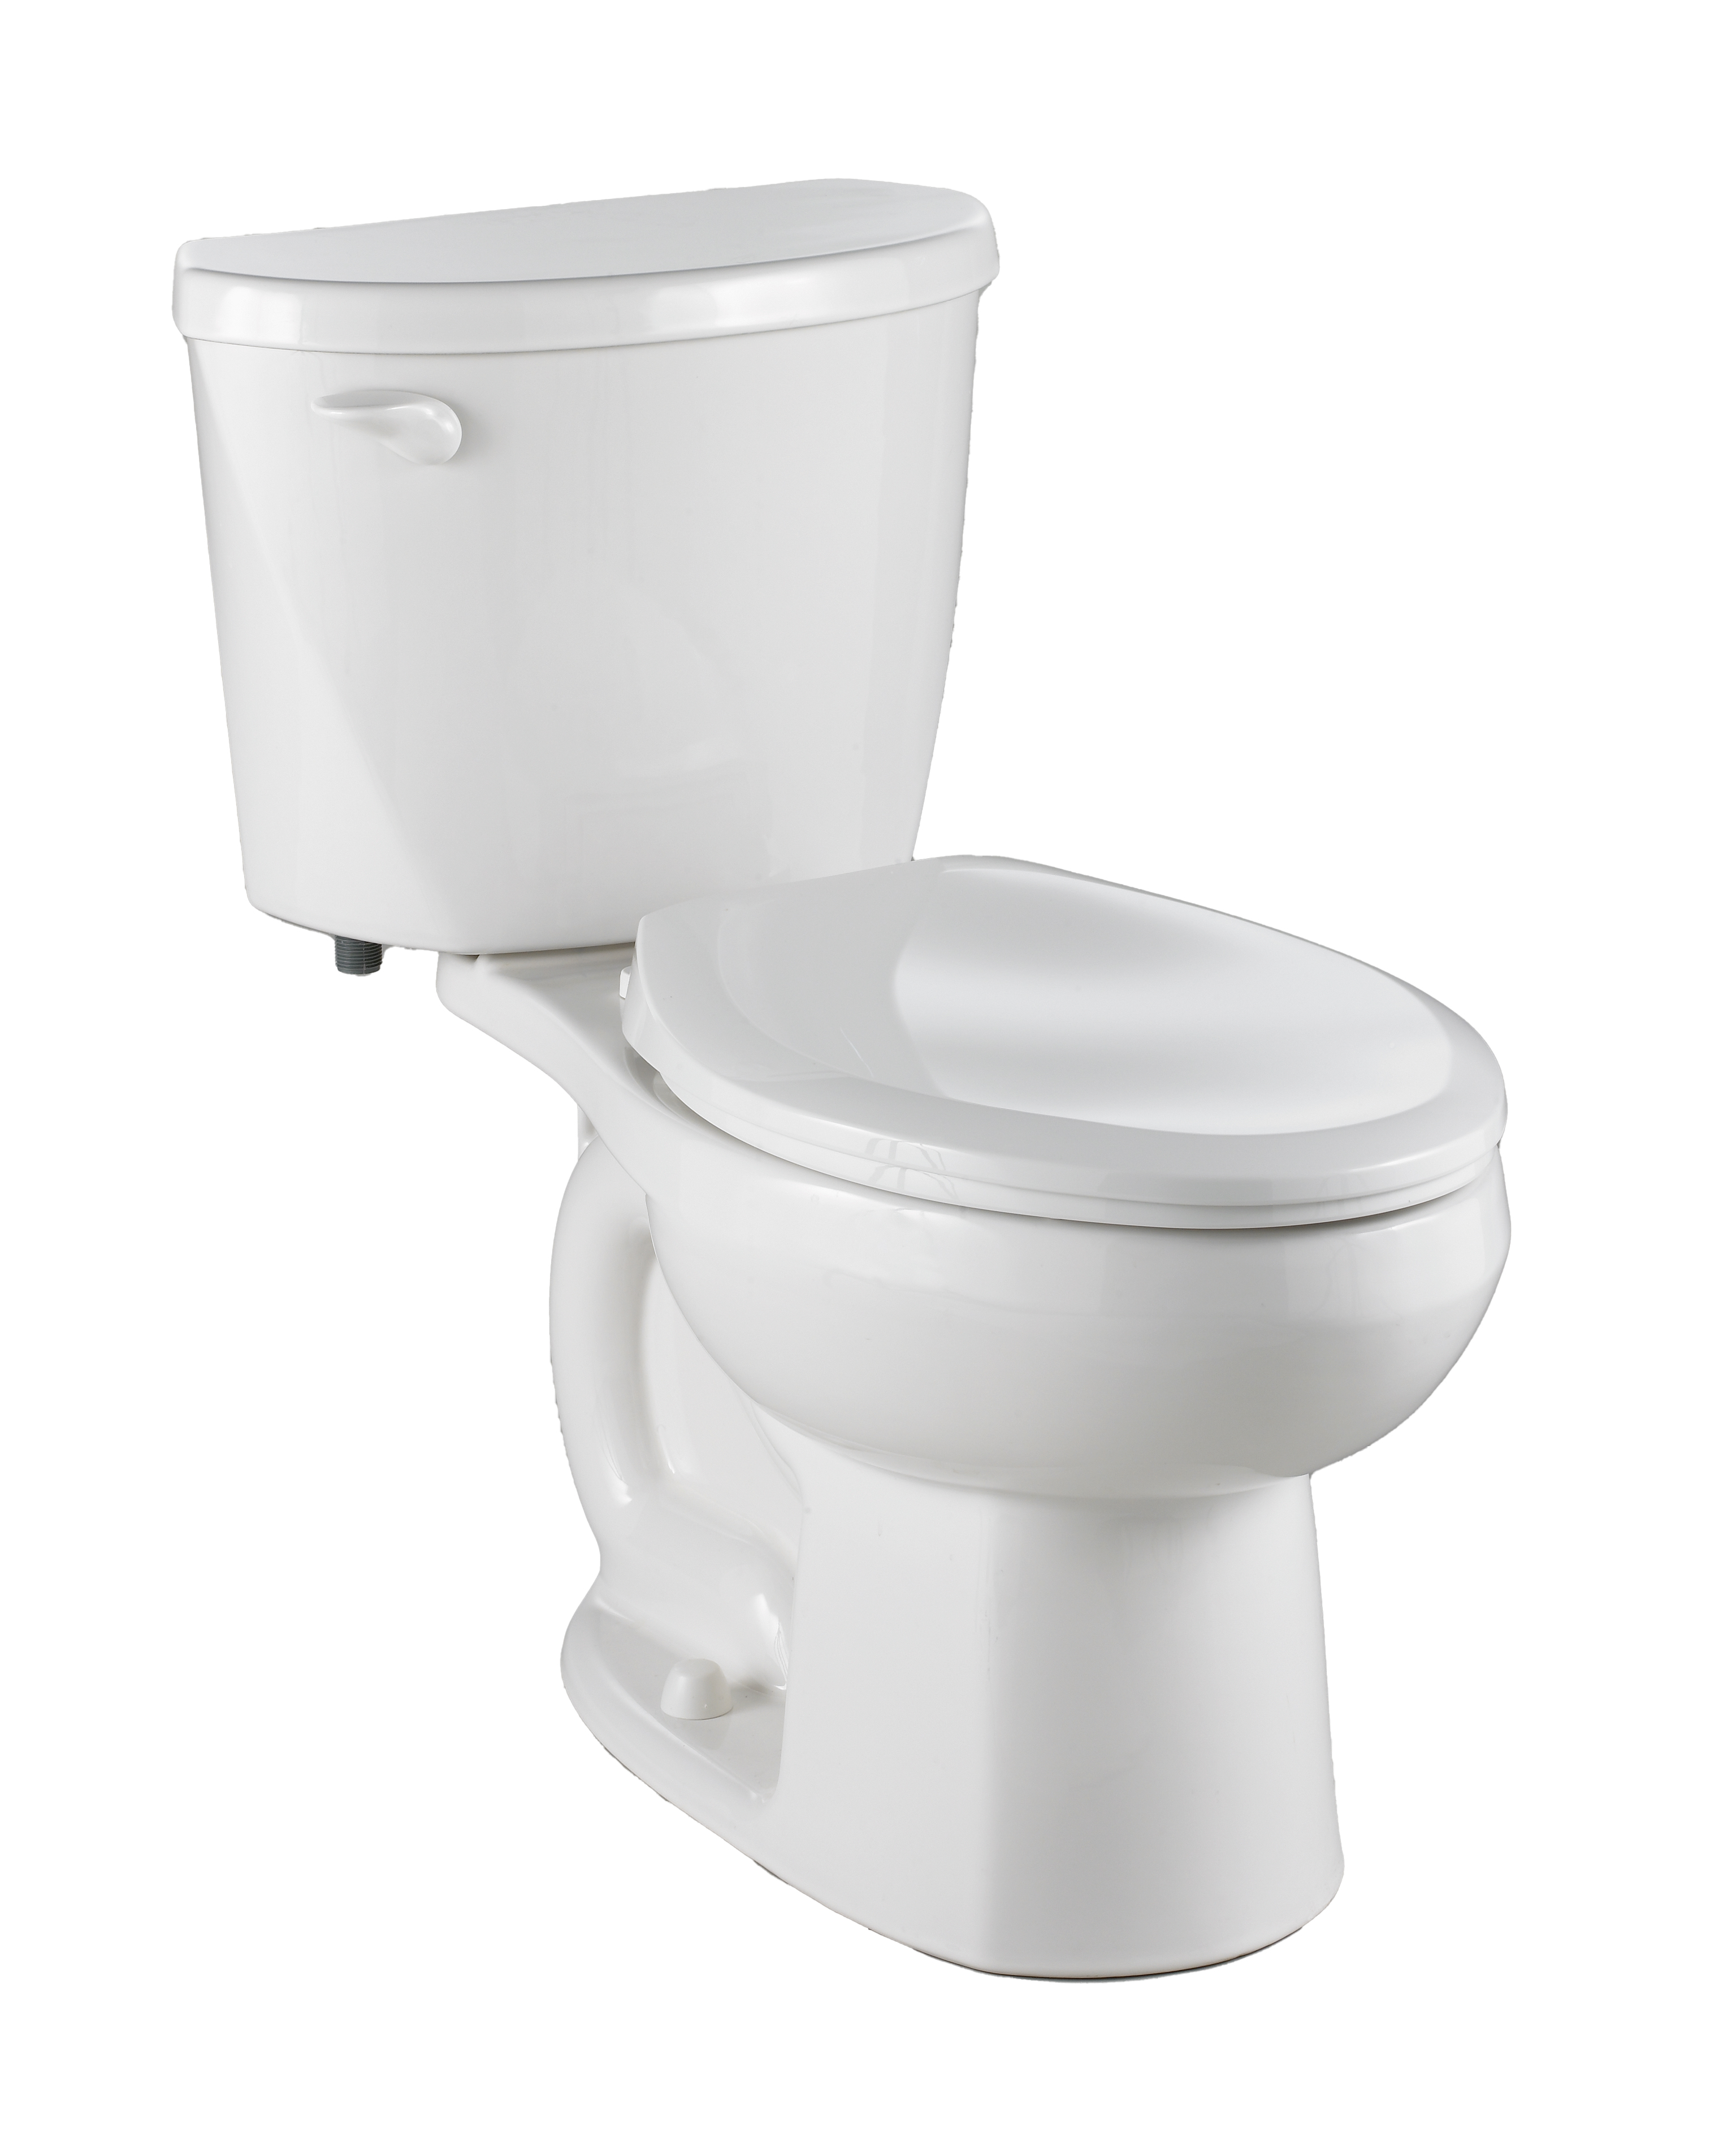 Evolution 2 Two-Piece 1.6 gpf/6.0 Lpf Standard Height Elongated Toilet Less Seat